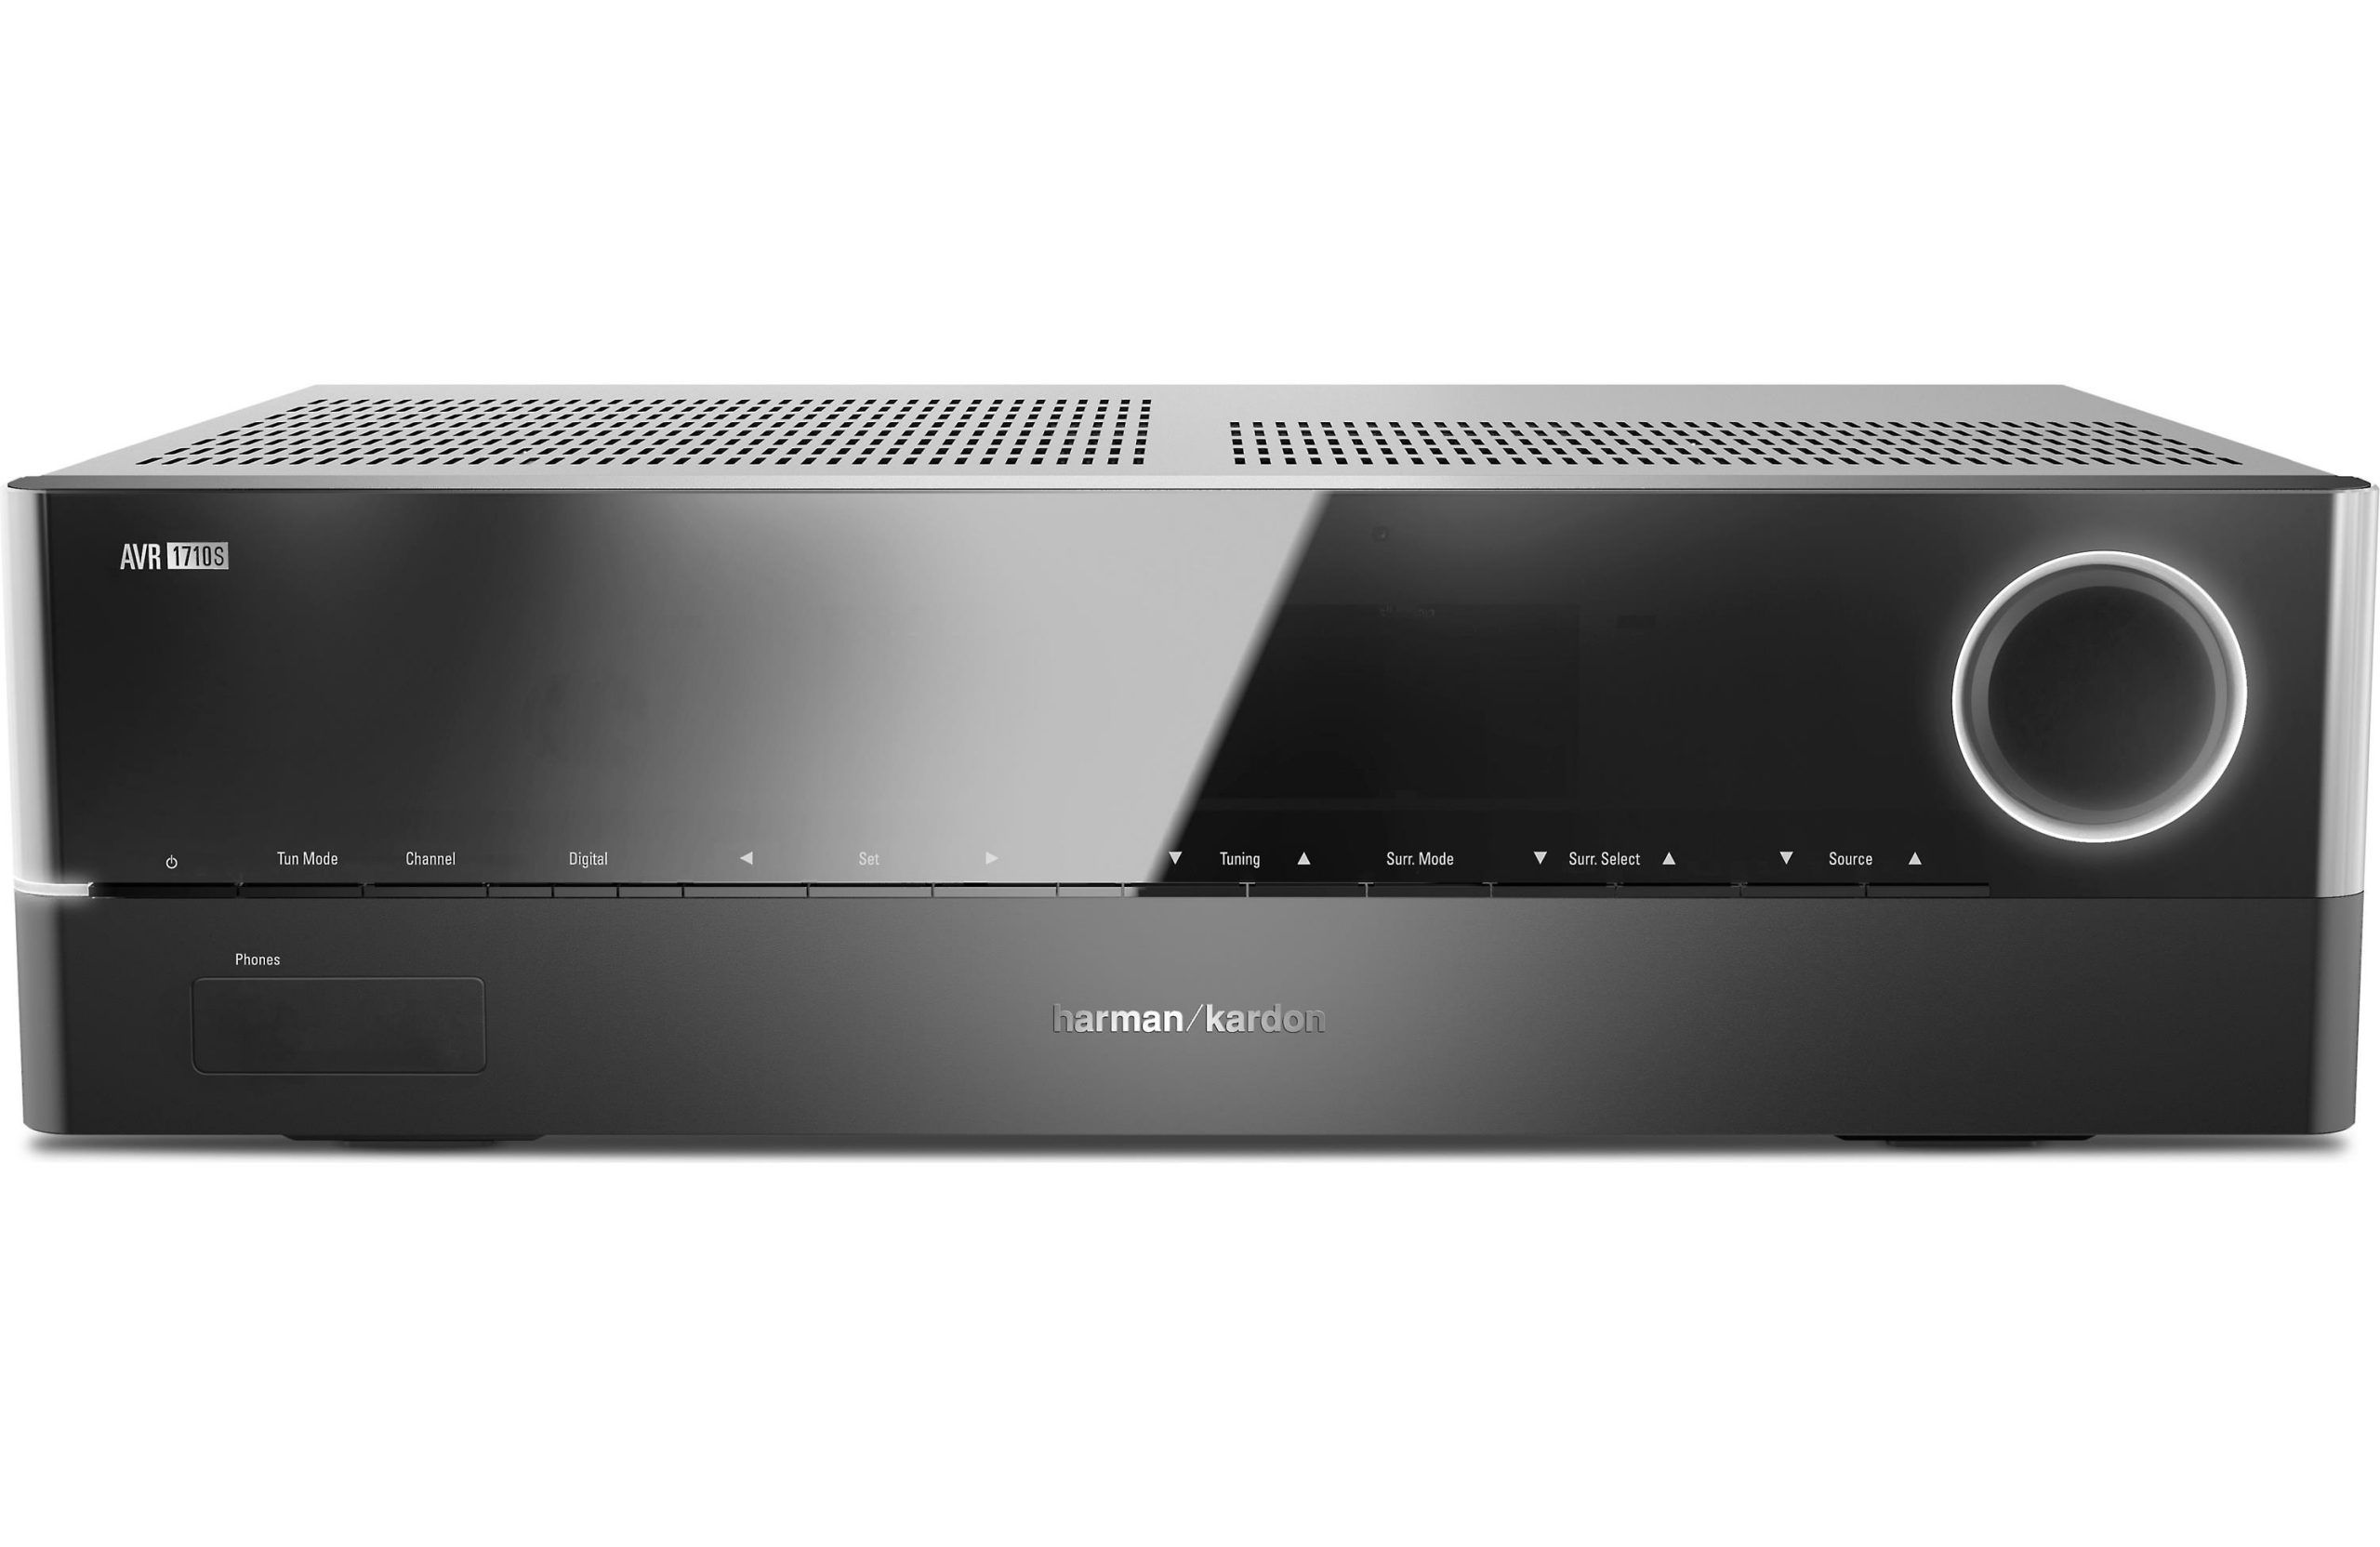 officieel Lijken legering Harman Kardon AVR 1710S 7.2-channel home theater receiver with Bluetooth •  Symphony Hifi